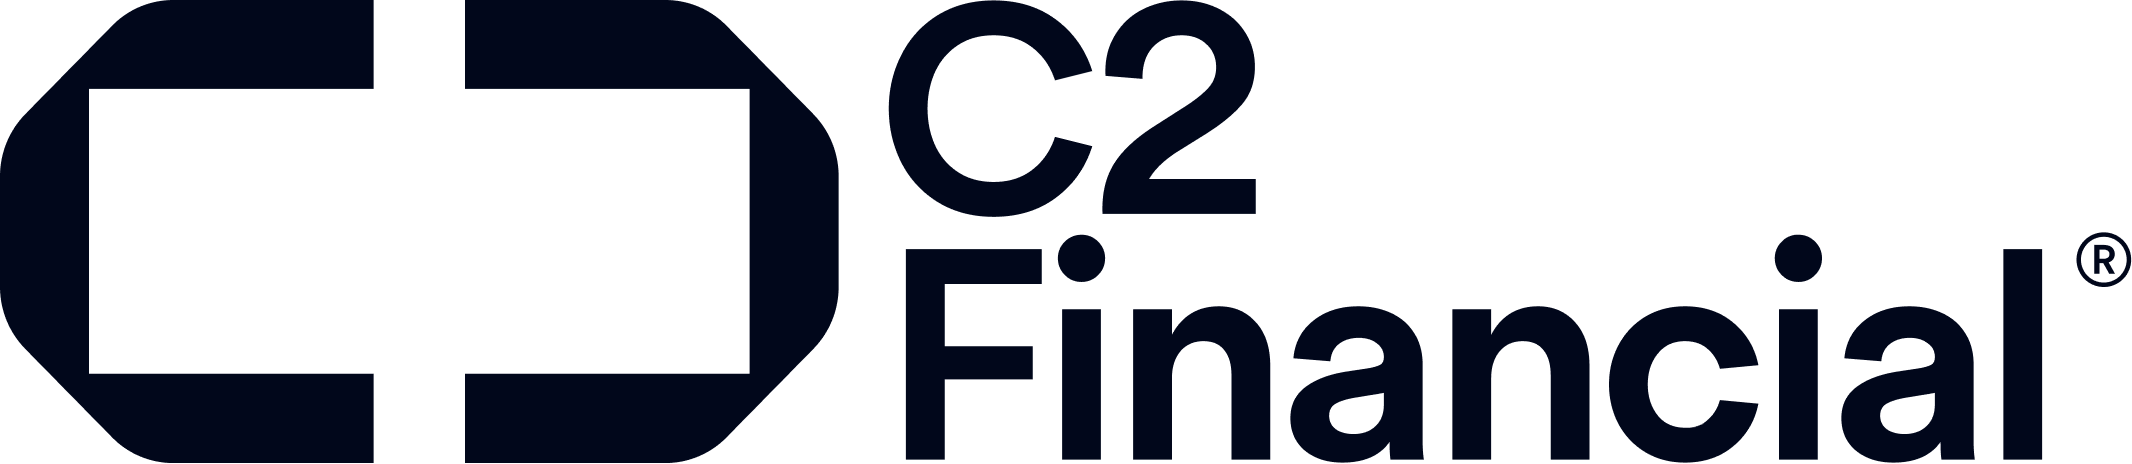 C2 Financial logo